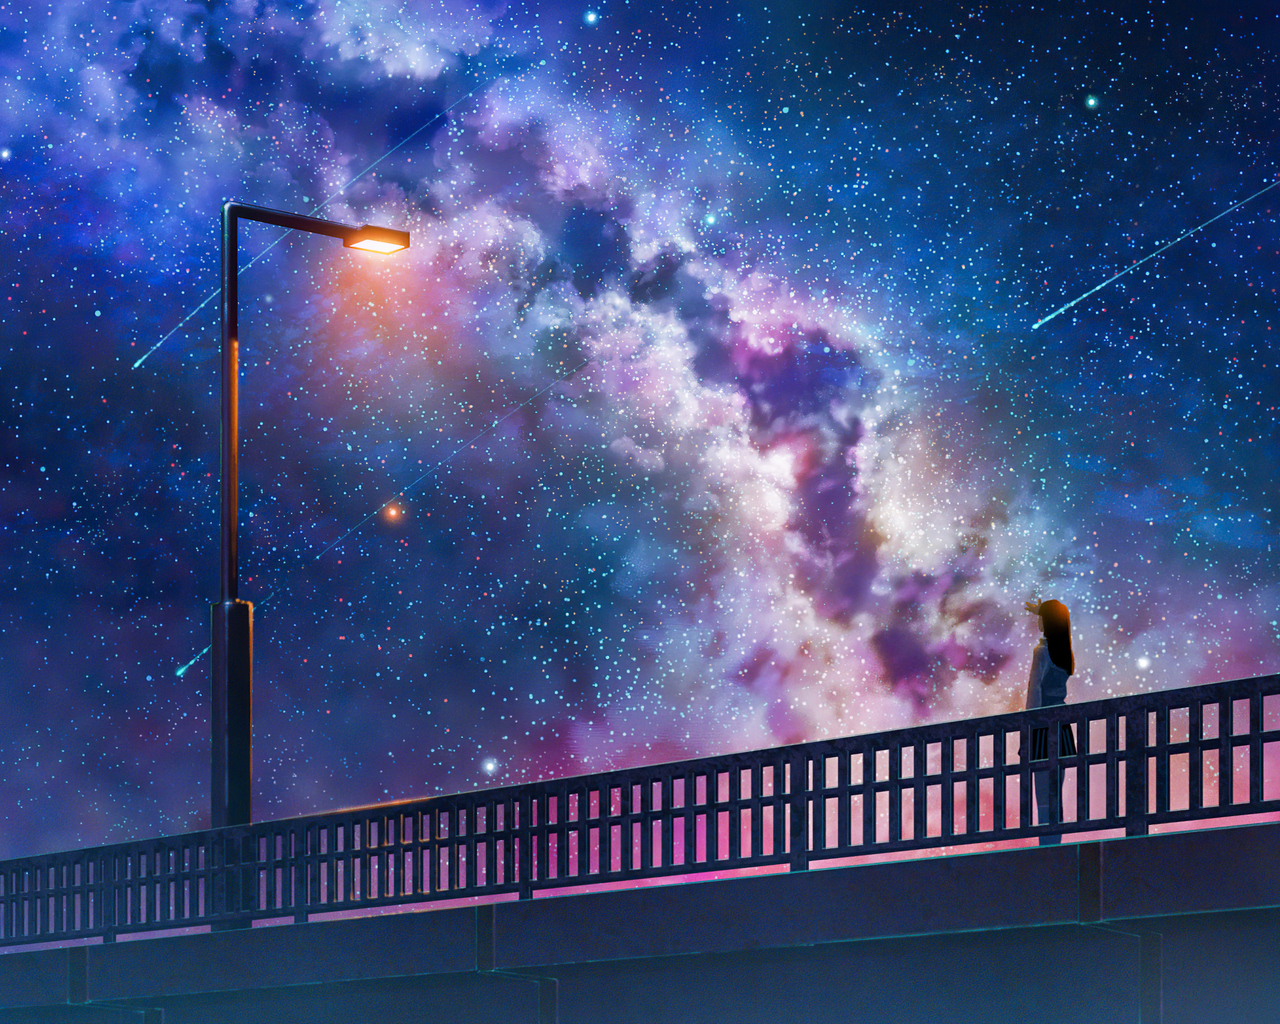 1280x1024 Anime Girl Alone At Bridge Watching The Galaxy Full Of Stars ...